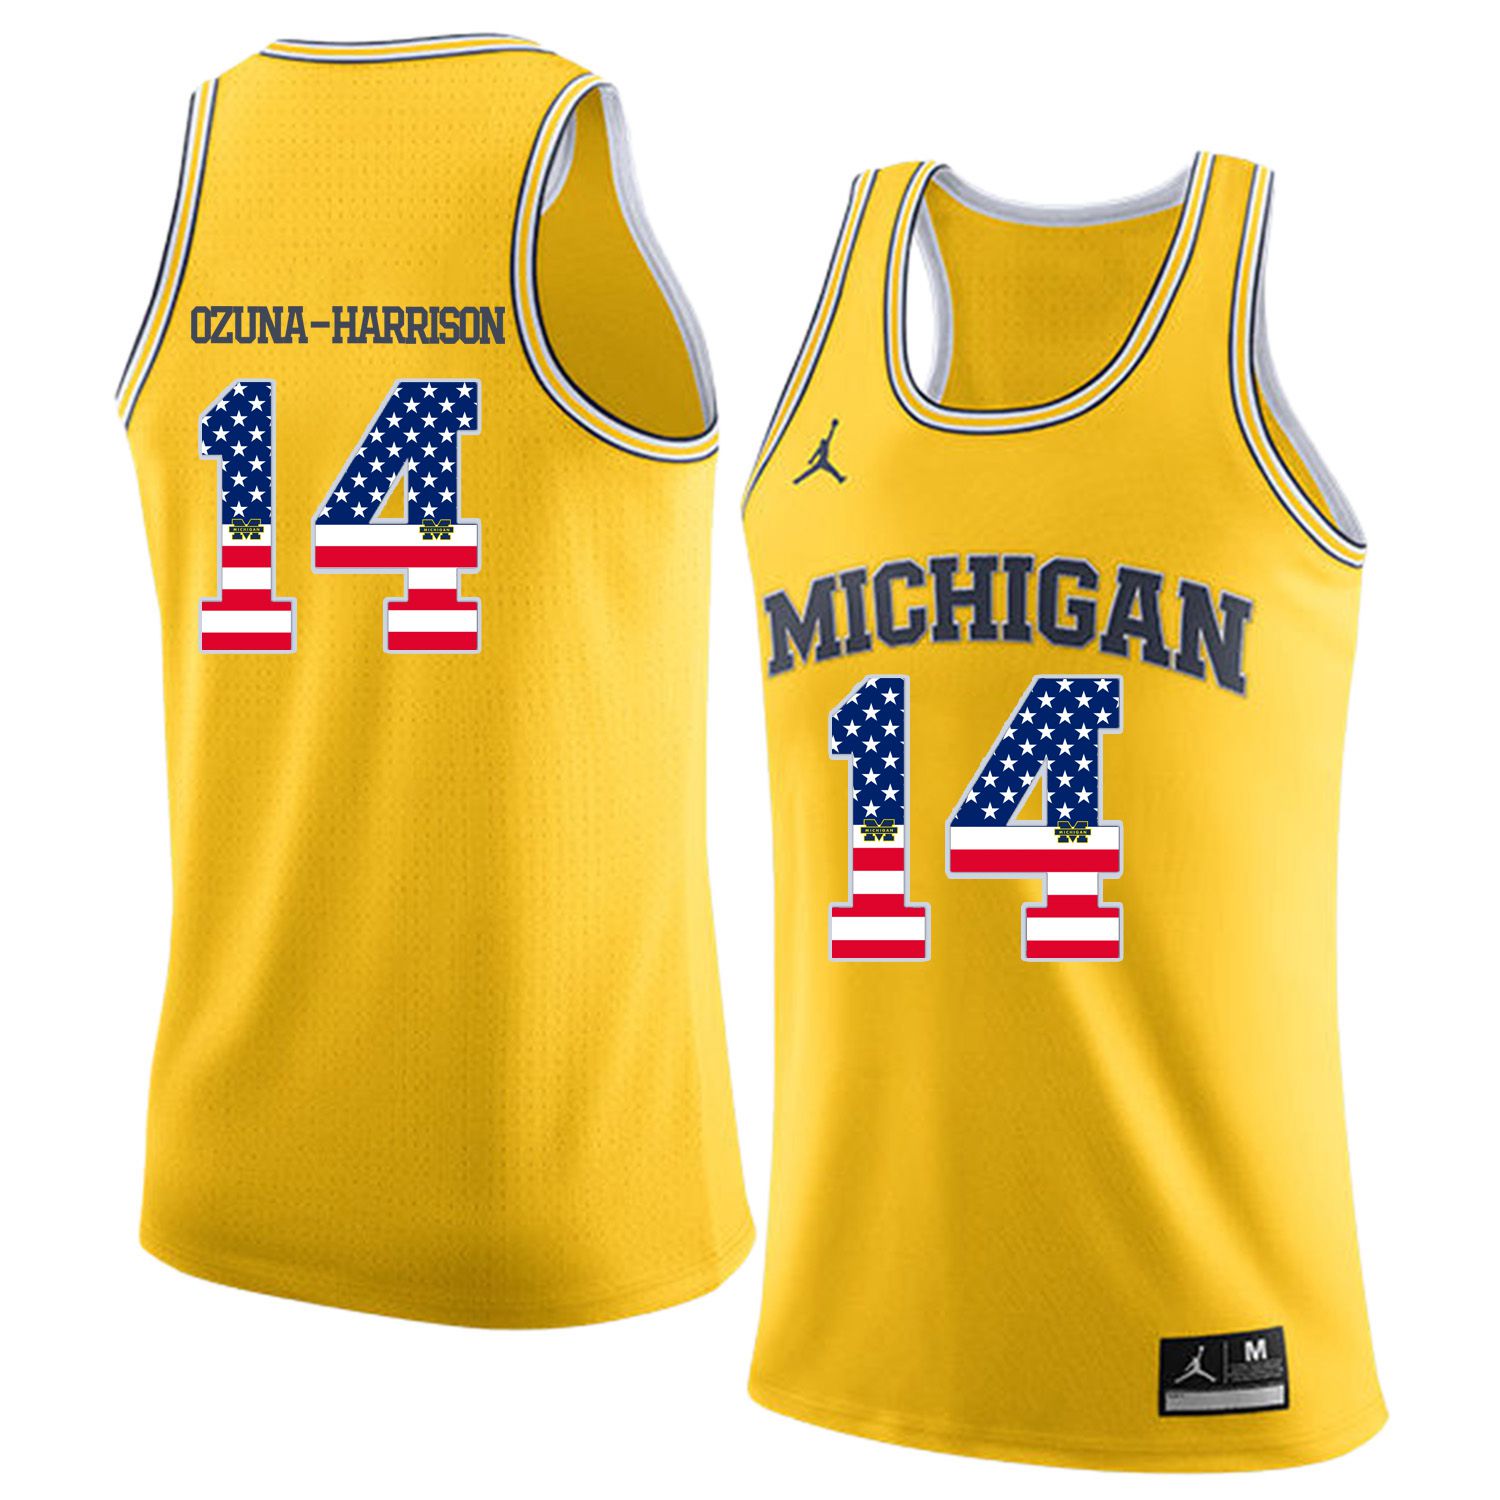 Men Jordan University of Michigan Basketball Yellow 14 Ozuna-Harrison Flag Customized NCAA Jerseys